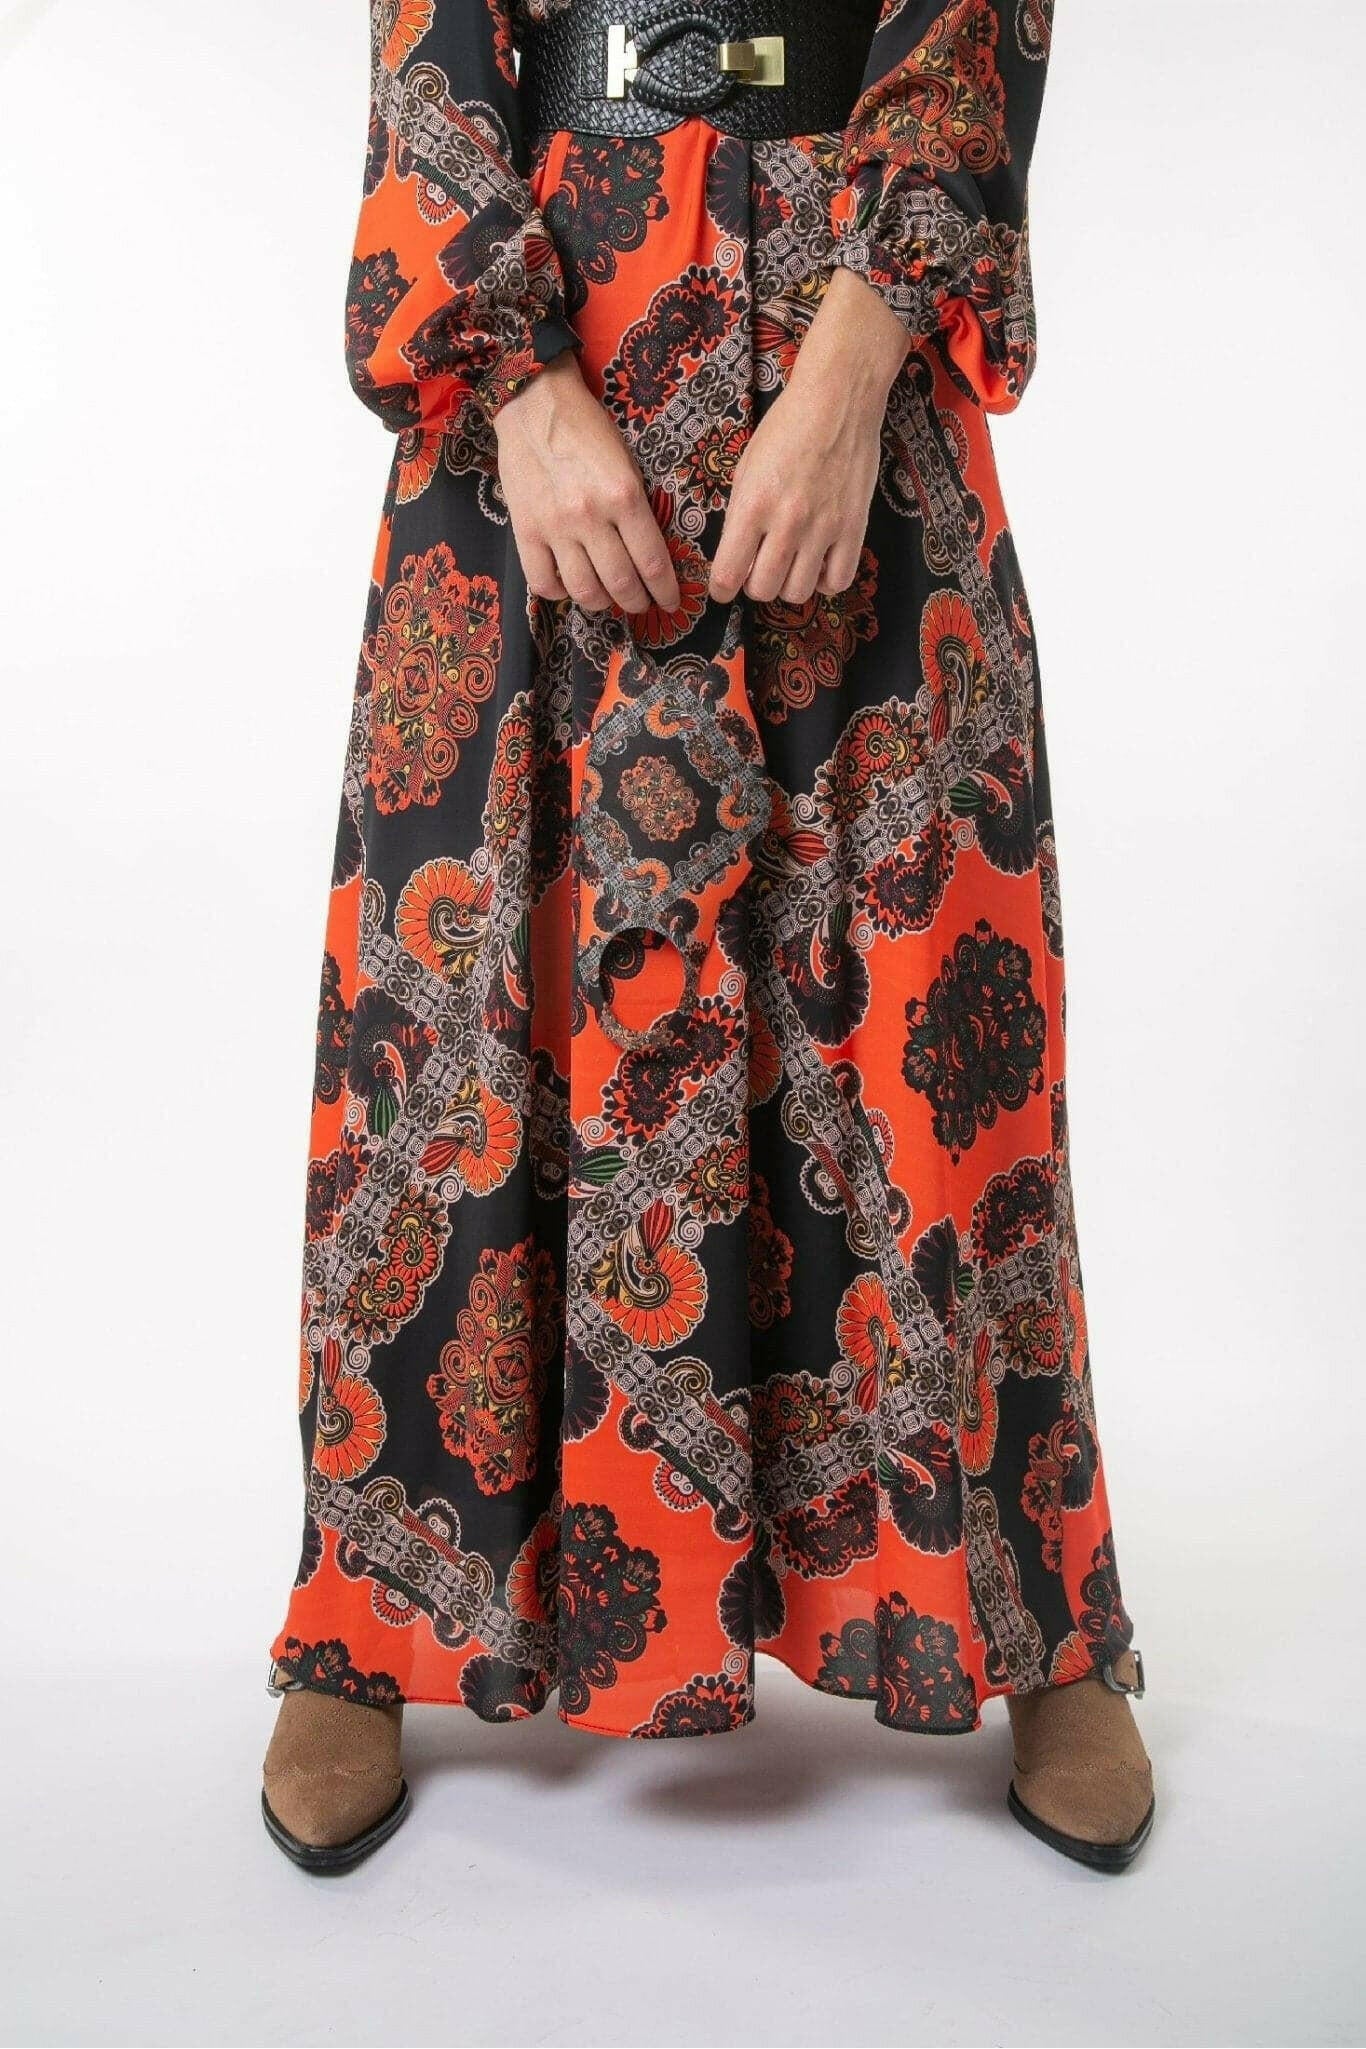 Zara Maxi Dress - Printed Maxi Dress Zara with Long Sleeves - By Baano Maxi Dress BY Baano   